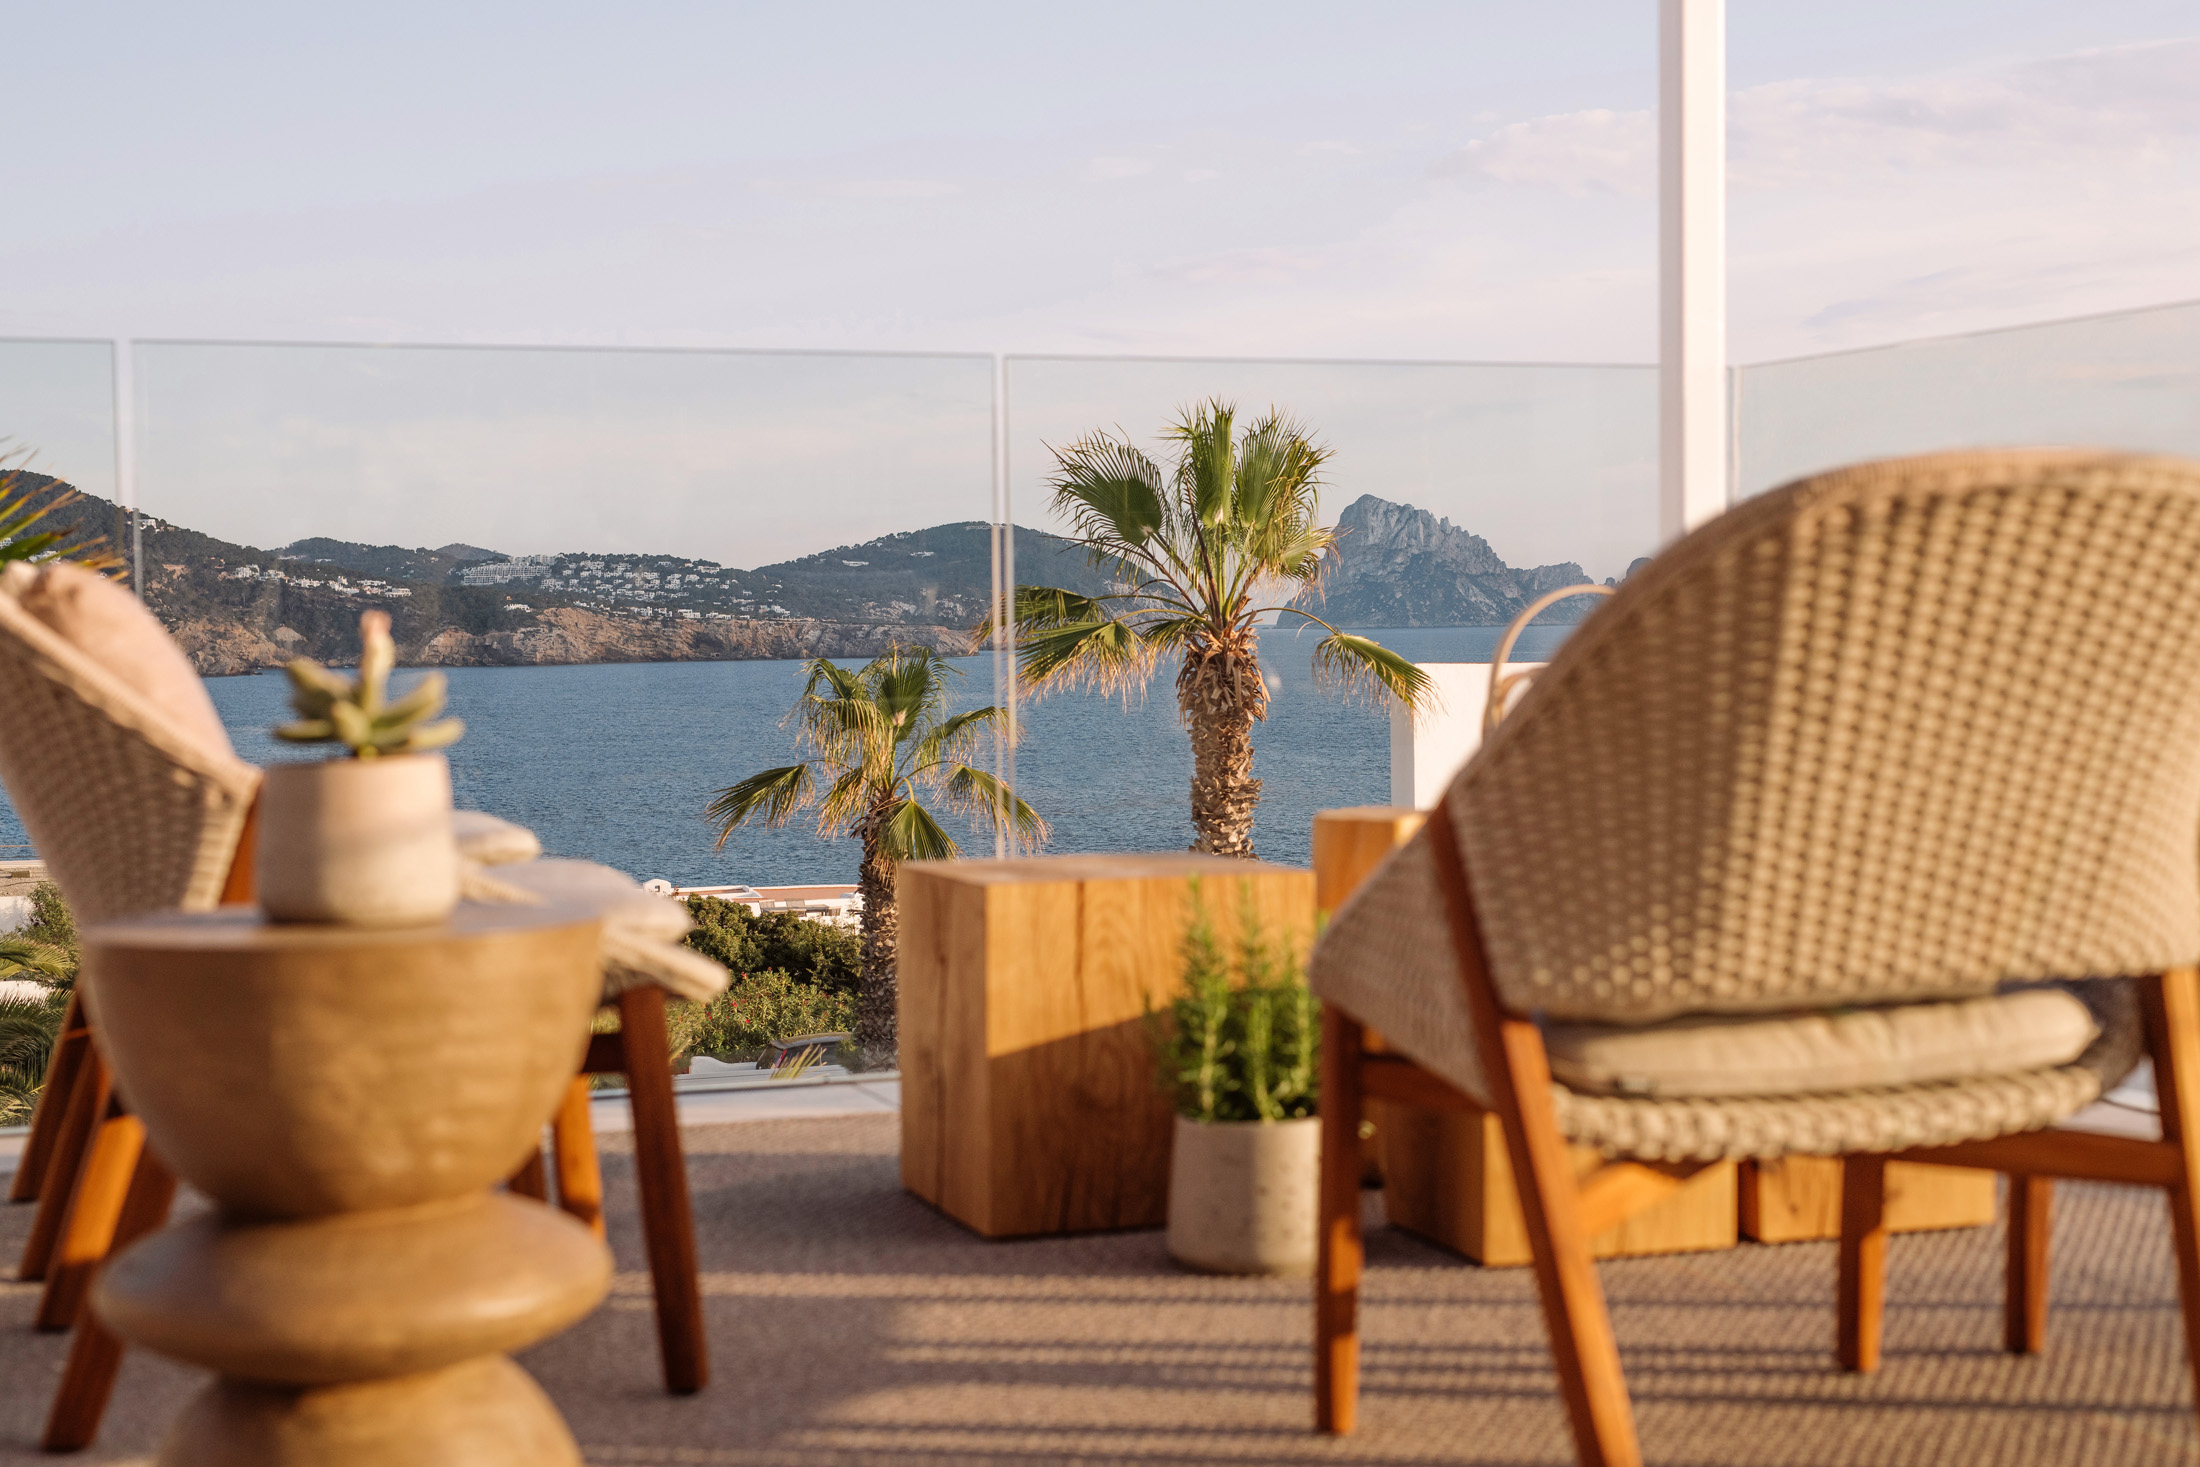 Sea views from a luxury rental villa in Ibiza